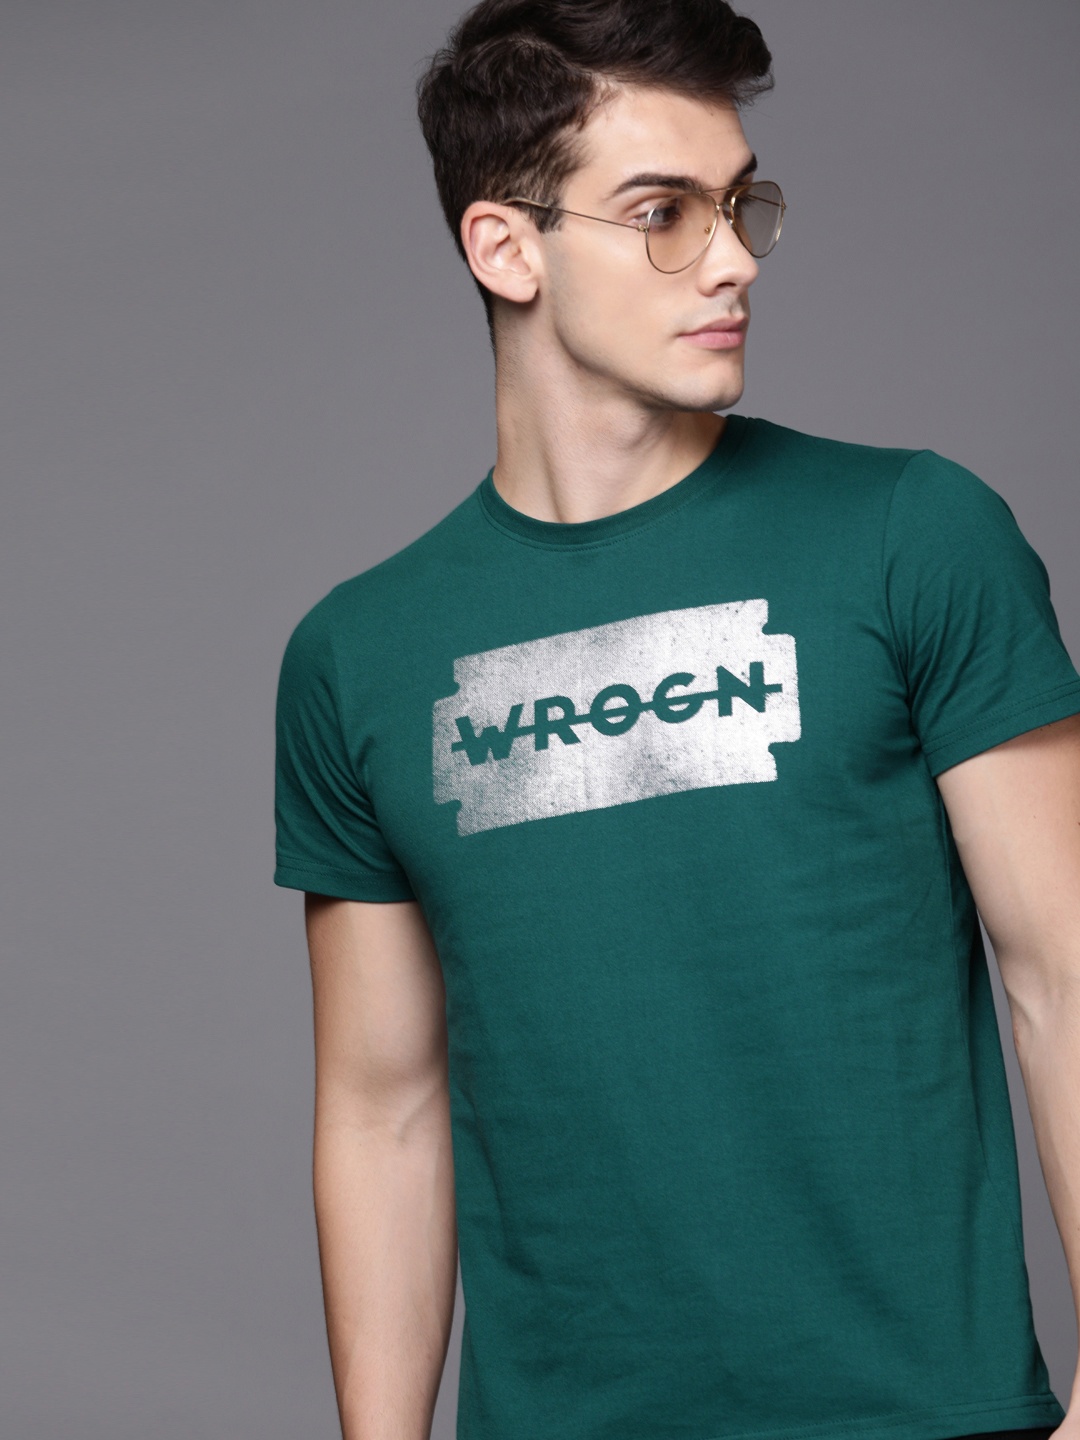 

WROGN Men Teal Green Printed Round Neck T-shirt